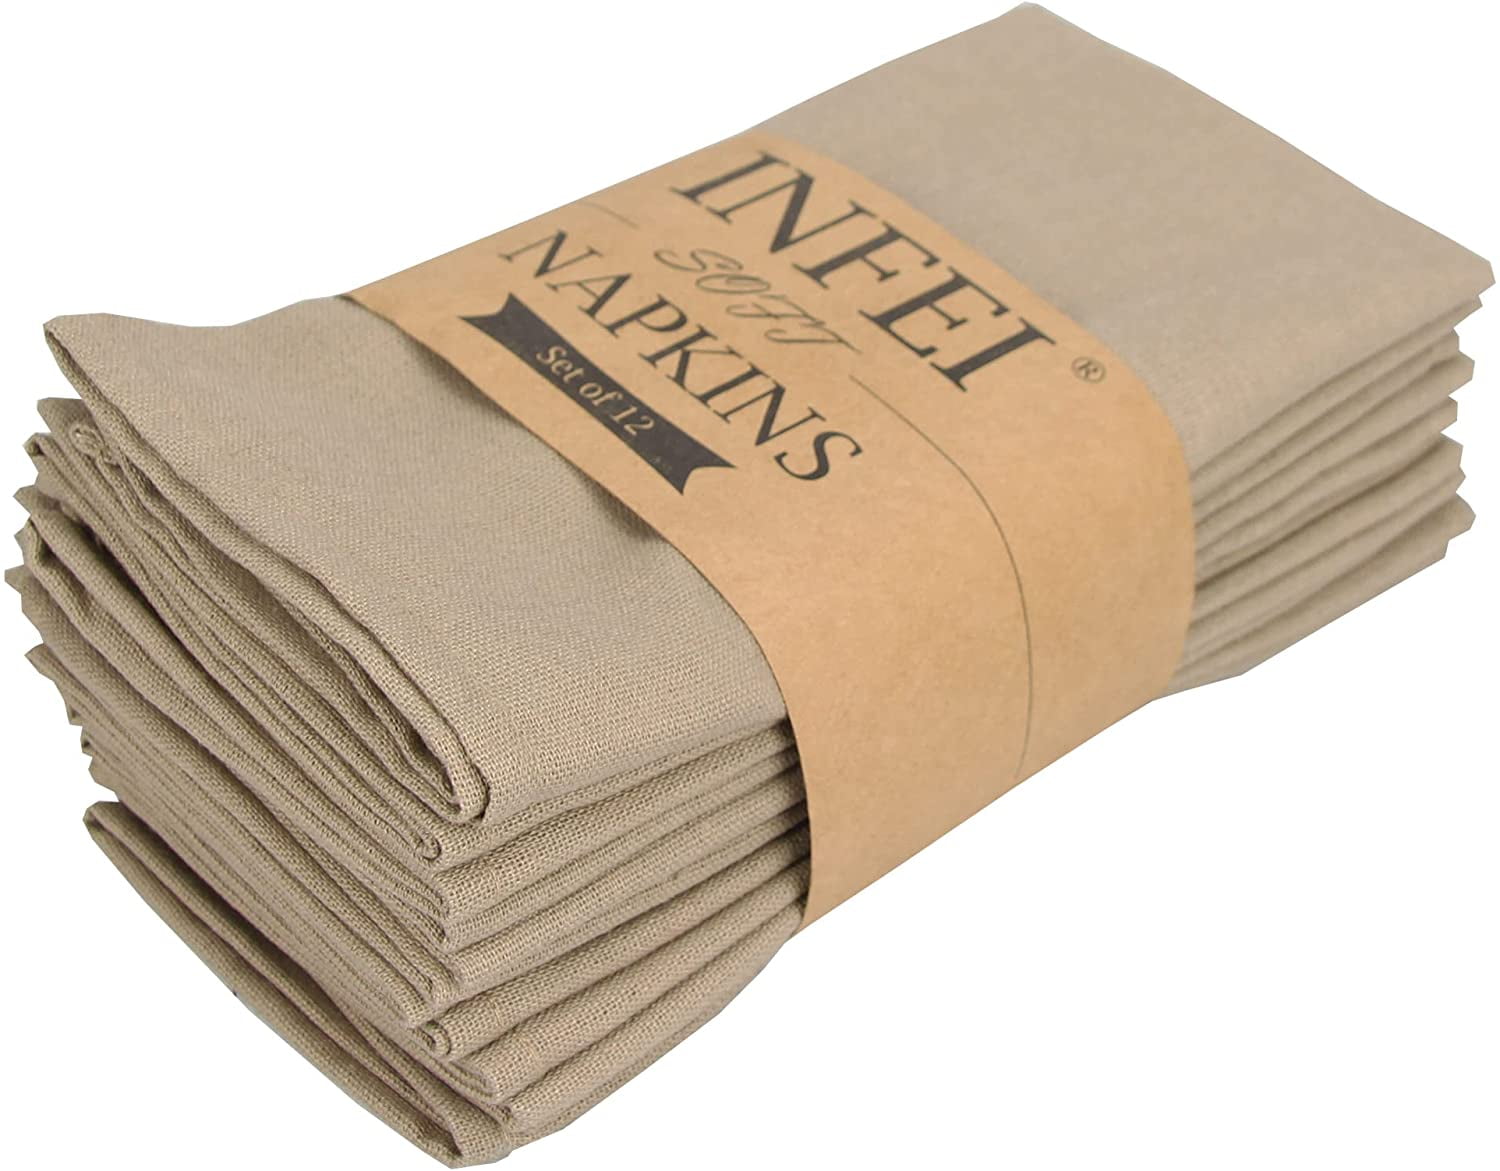 INFEI Soft Vintage Grain Linen Cotton Dinner Cloth Napkins Black 40 x 30 cm - for Events & Home Use Set of 12 